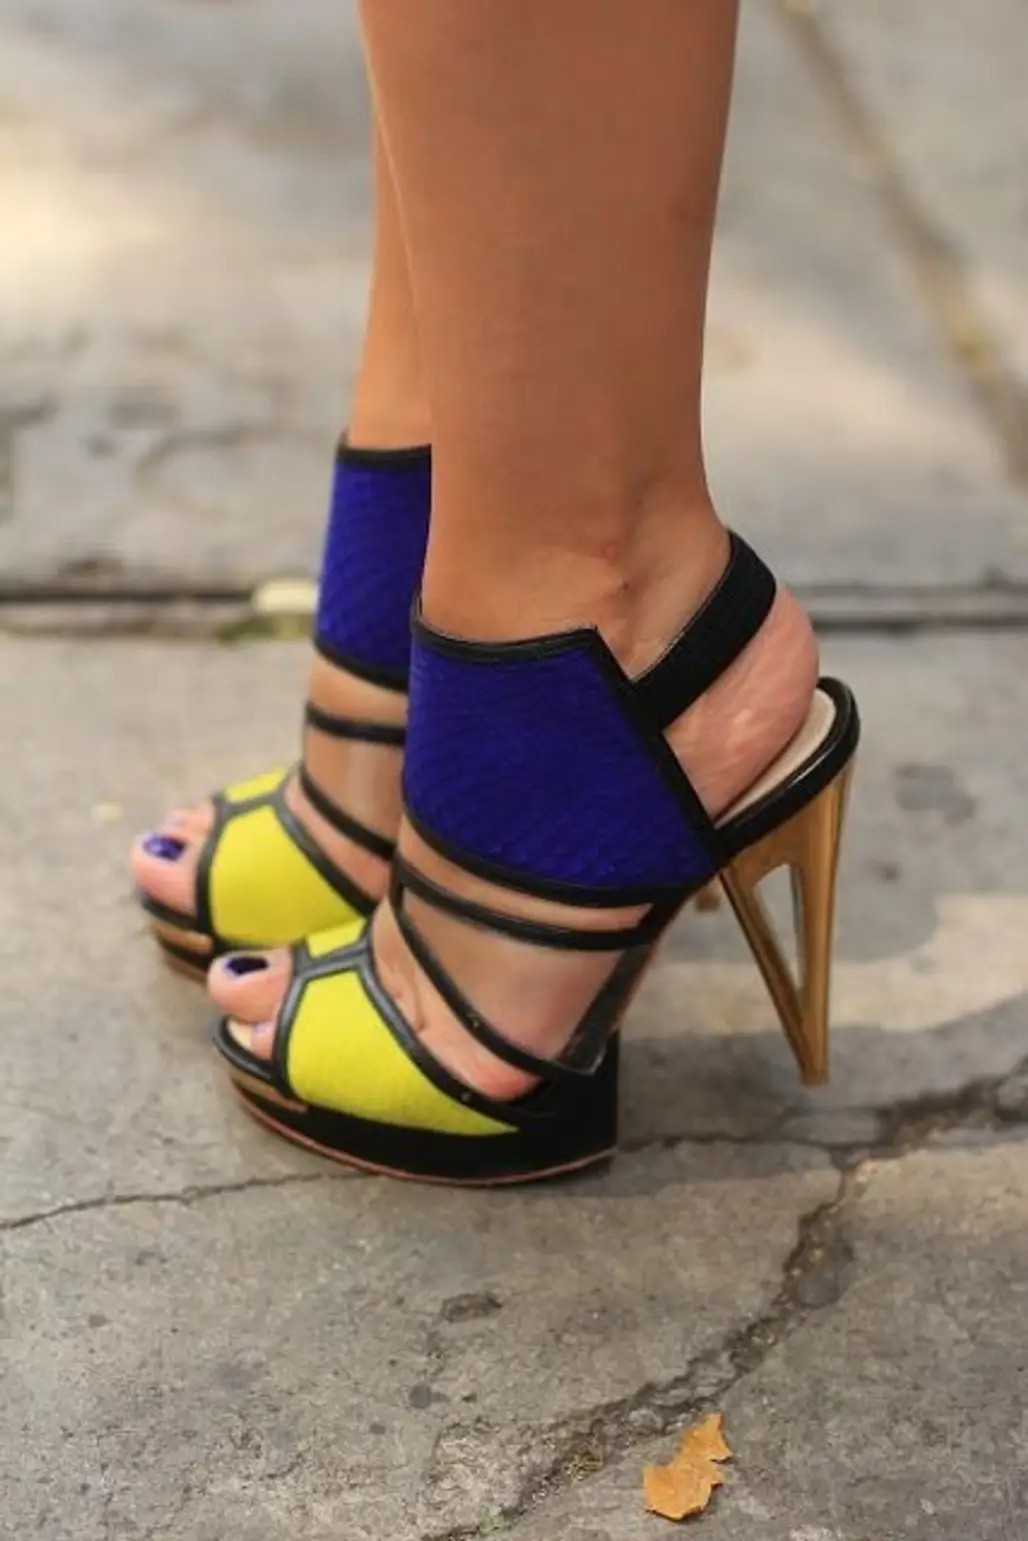 footwear,high heeled footwear,shoe,yellow,leg,